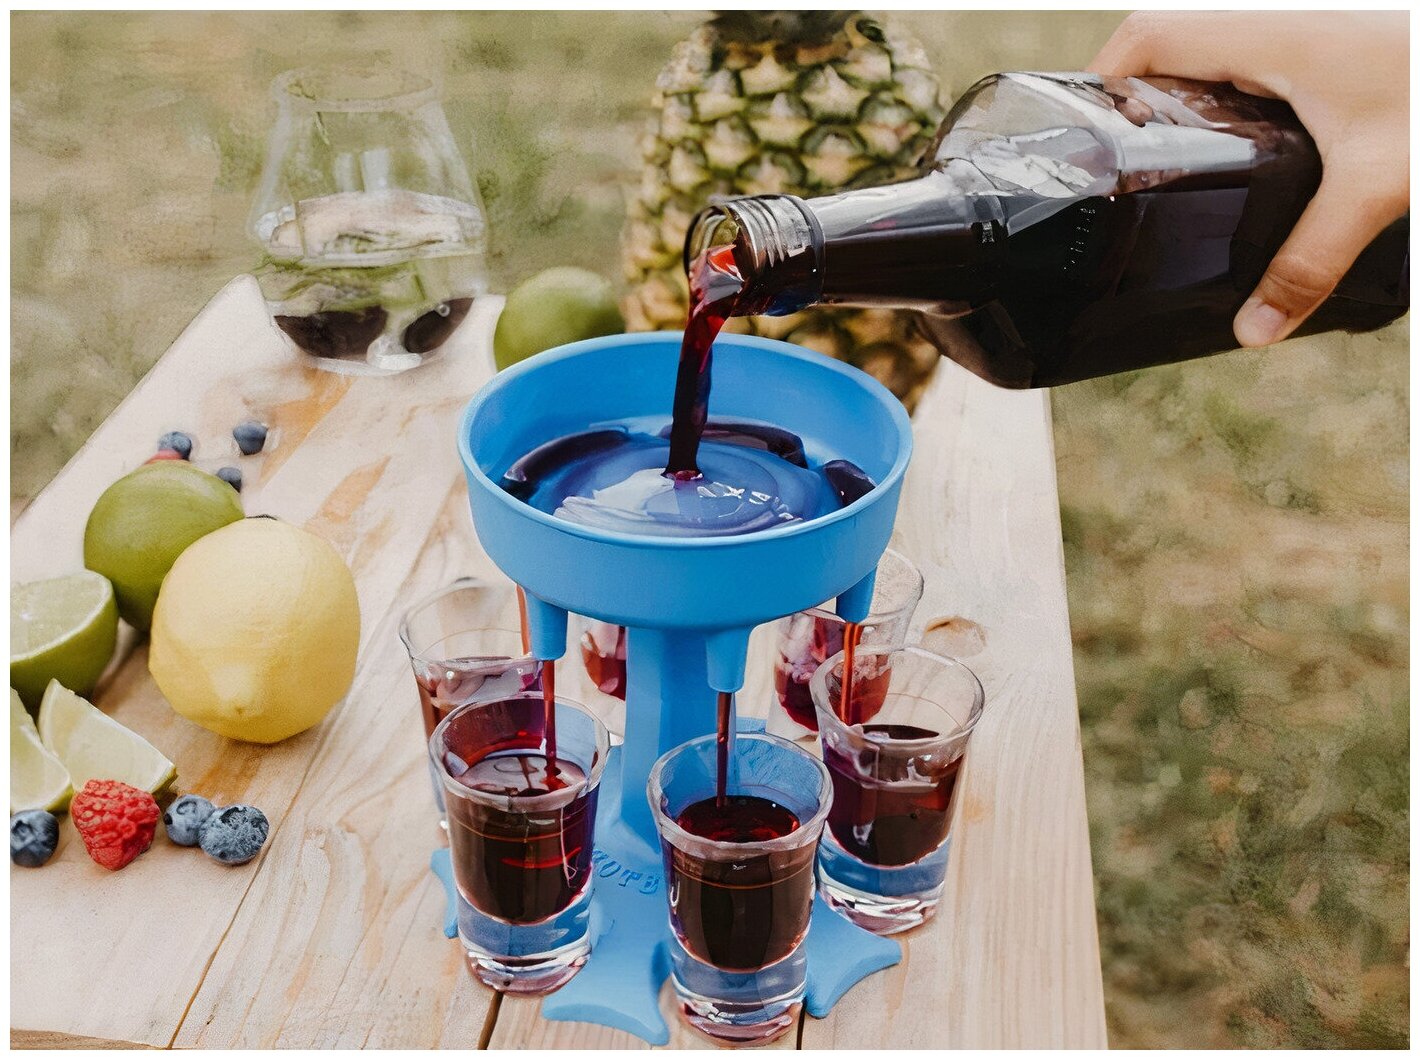 Диспенсер для напитков, синий / Система для розлива спиртных напитков / Наливатор-подставка